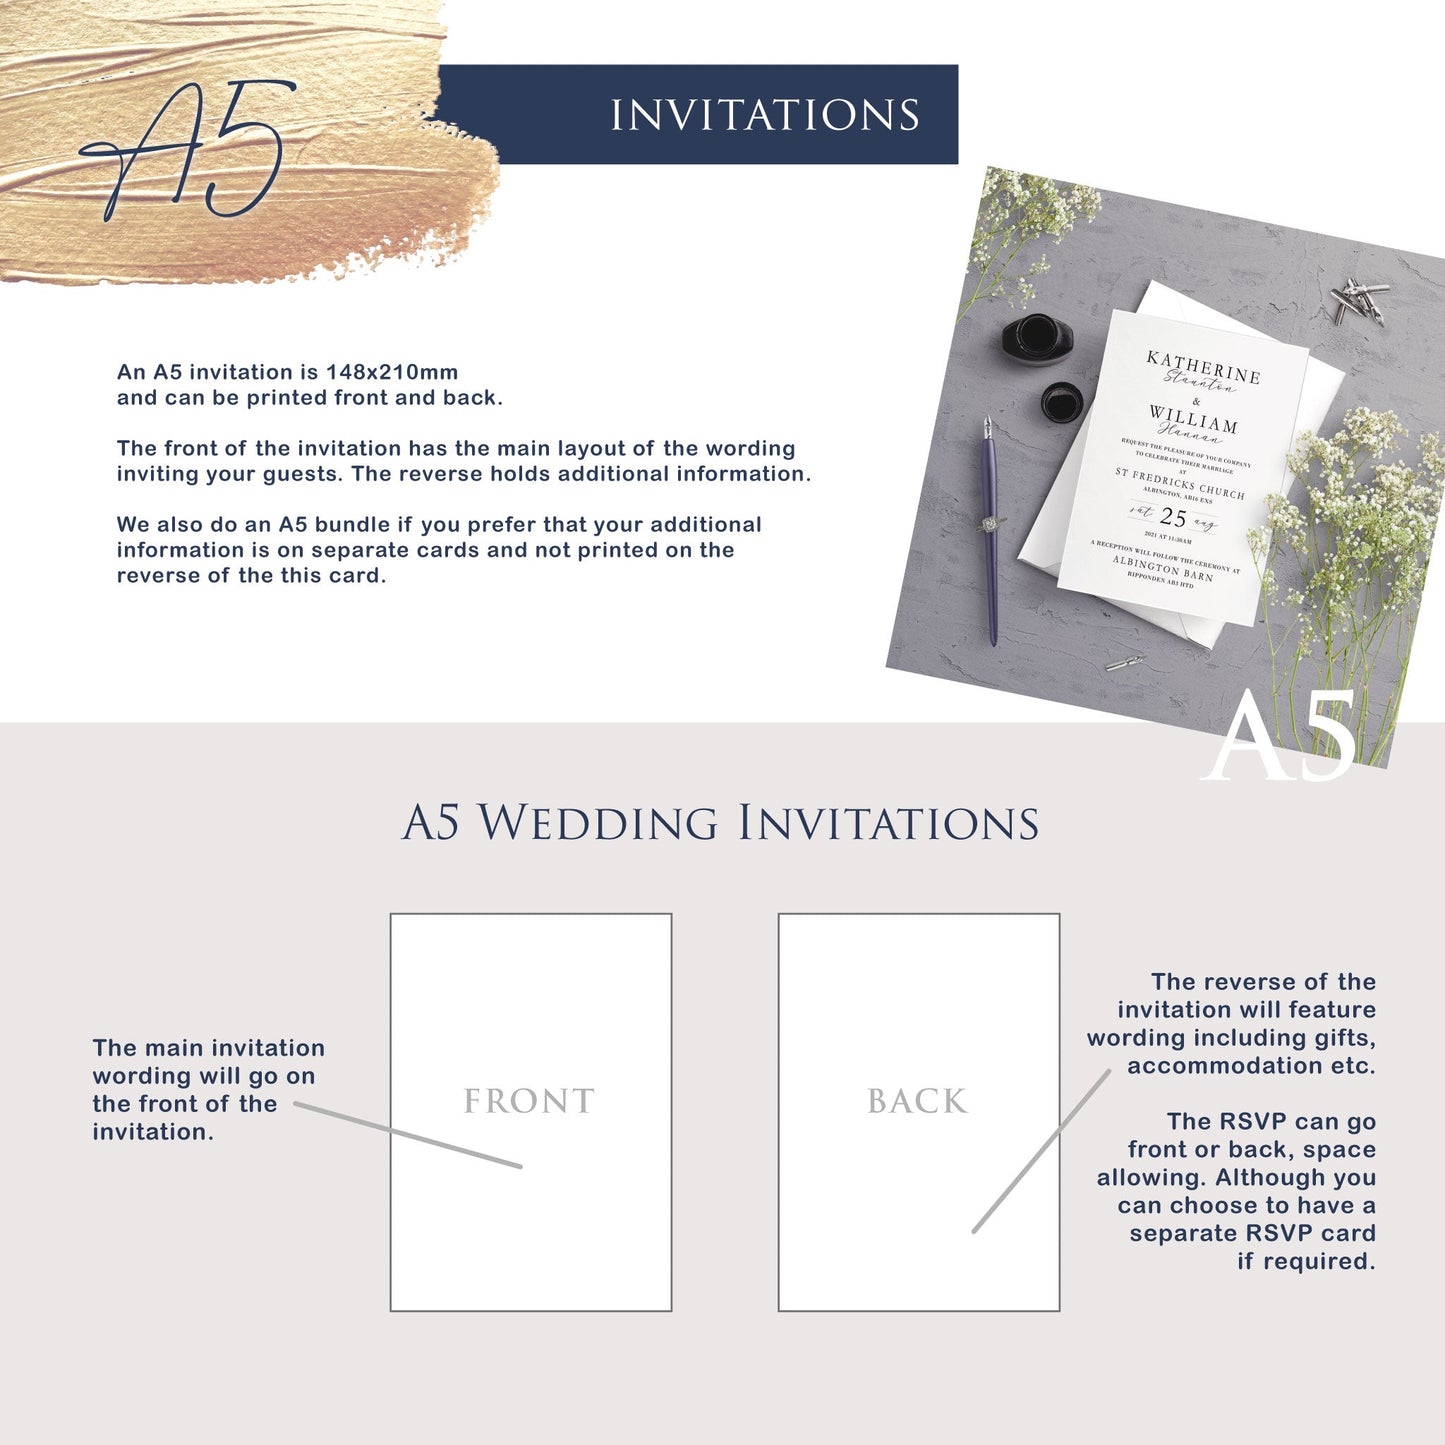 A5 Invitation - Printed or Foiled